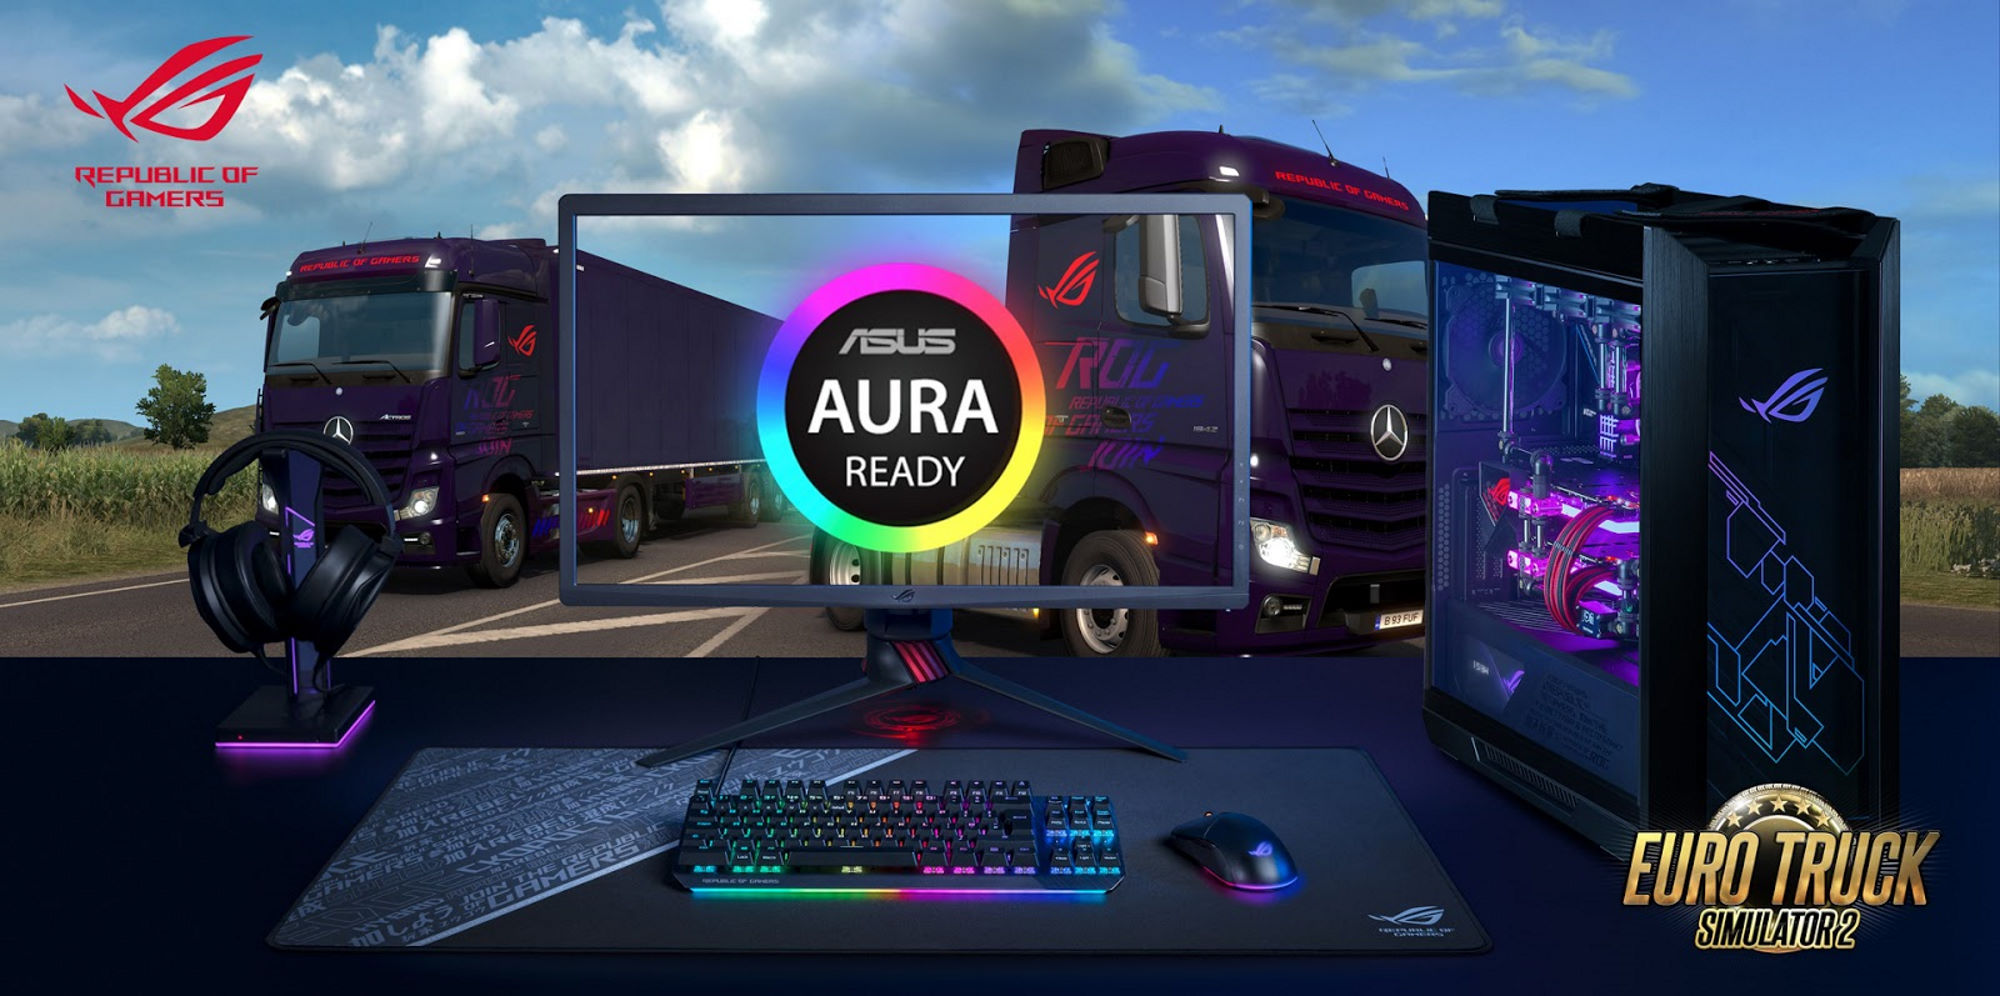 Aura Sync lights the way in Euro Truck Simulator 2